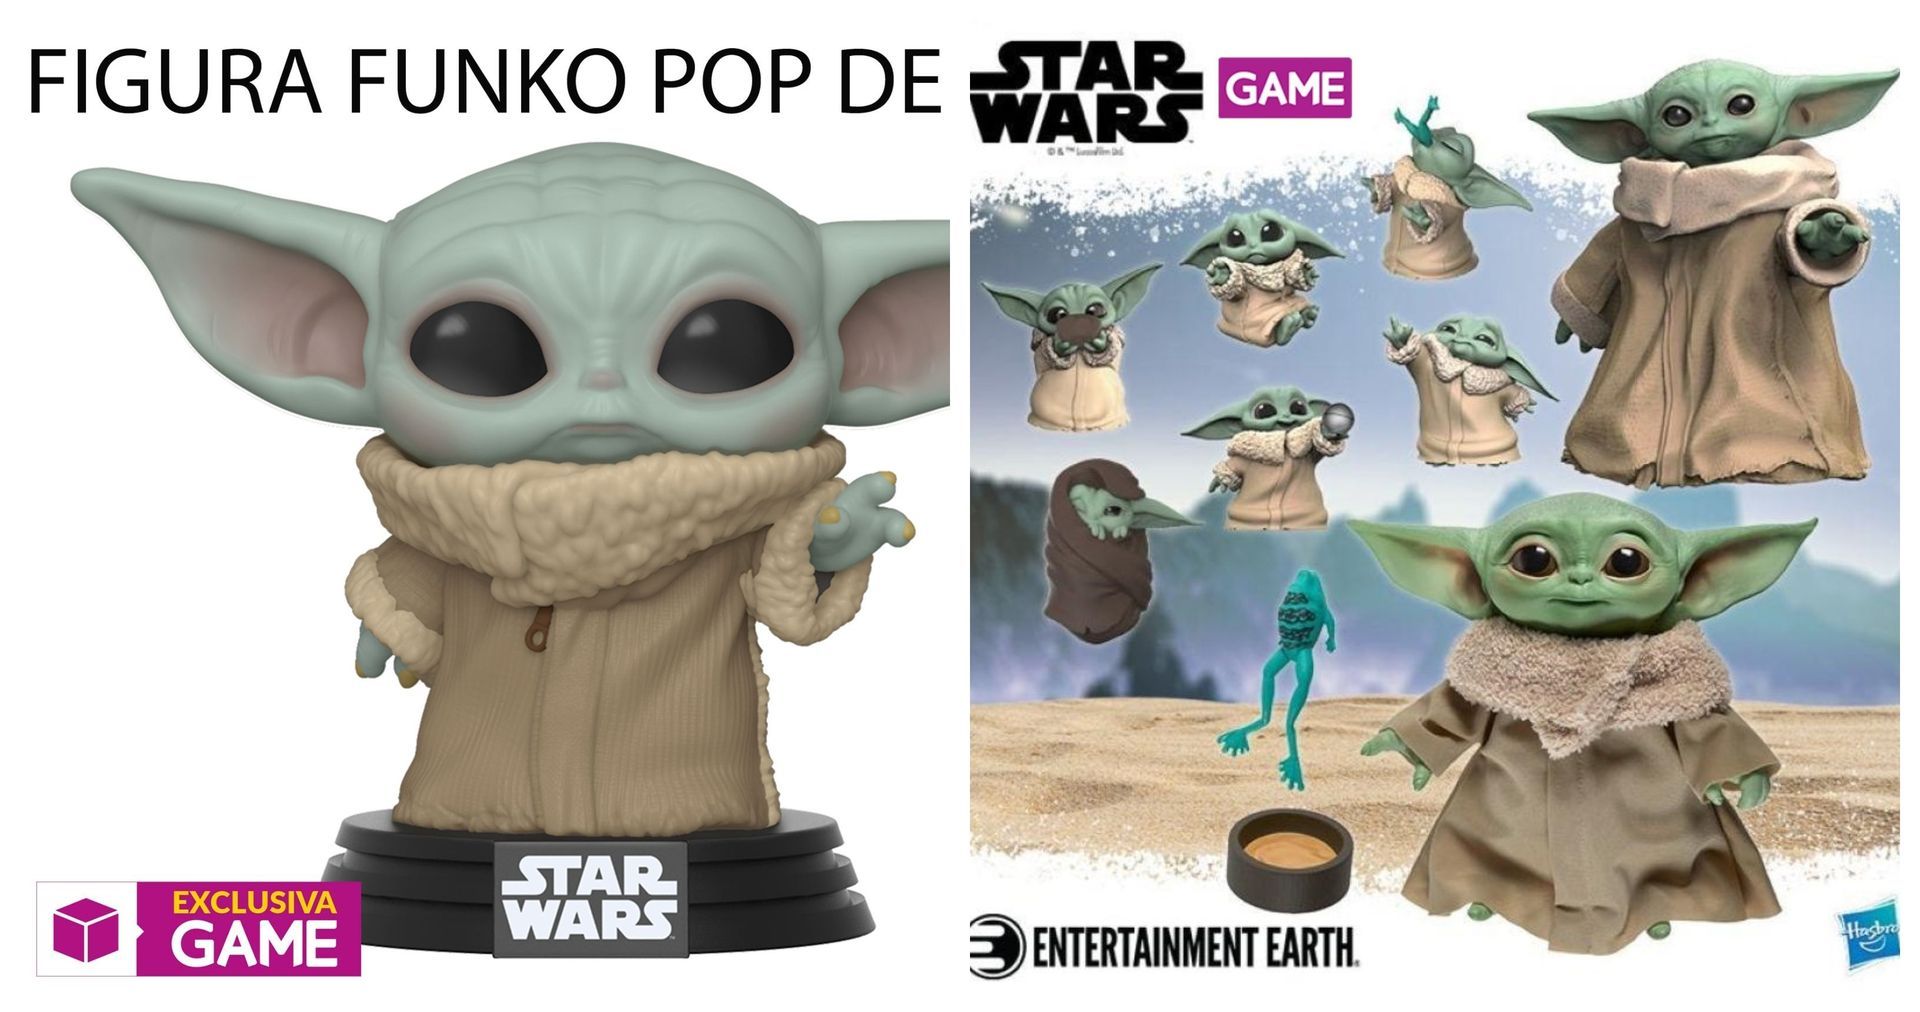 GAME presenta su merchandising de Baby Yoda de The Mandalorian